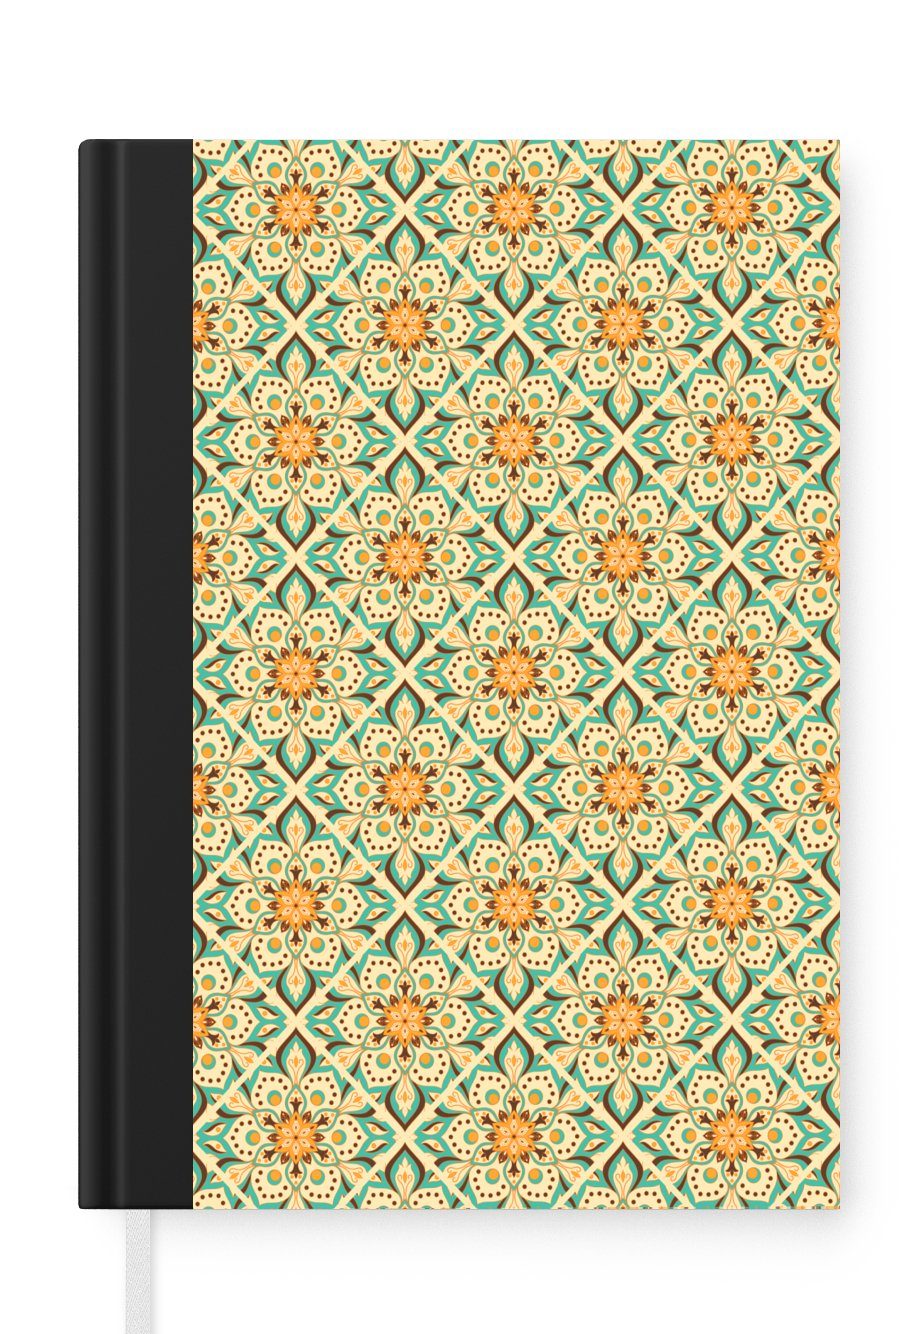 MuchoWow Notizbuch Boho - Muster - Mandala - Blumen, Journal, Merkzettel, Tagebuch, Notizheft, A5, 98 Seiten, Haushaltsbuch